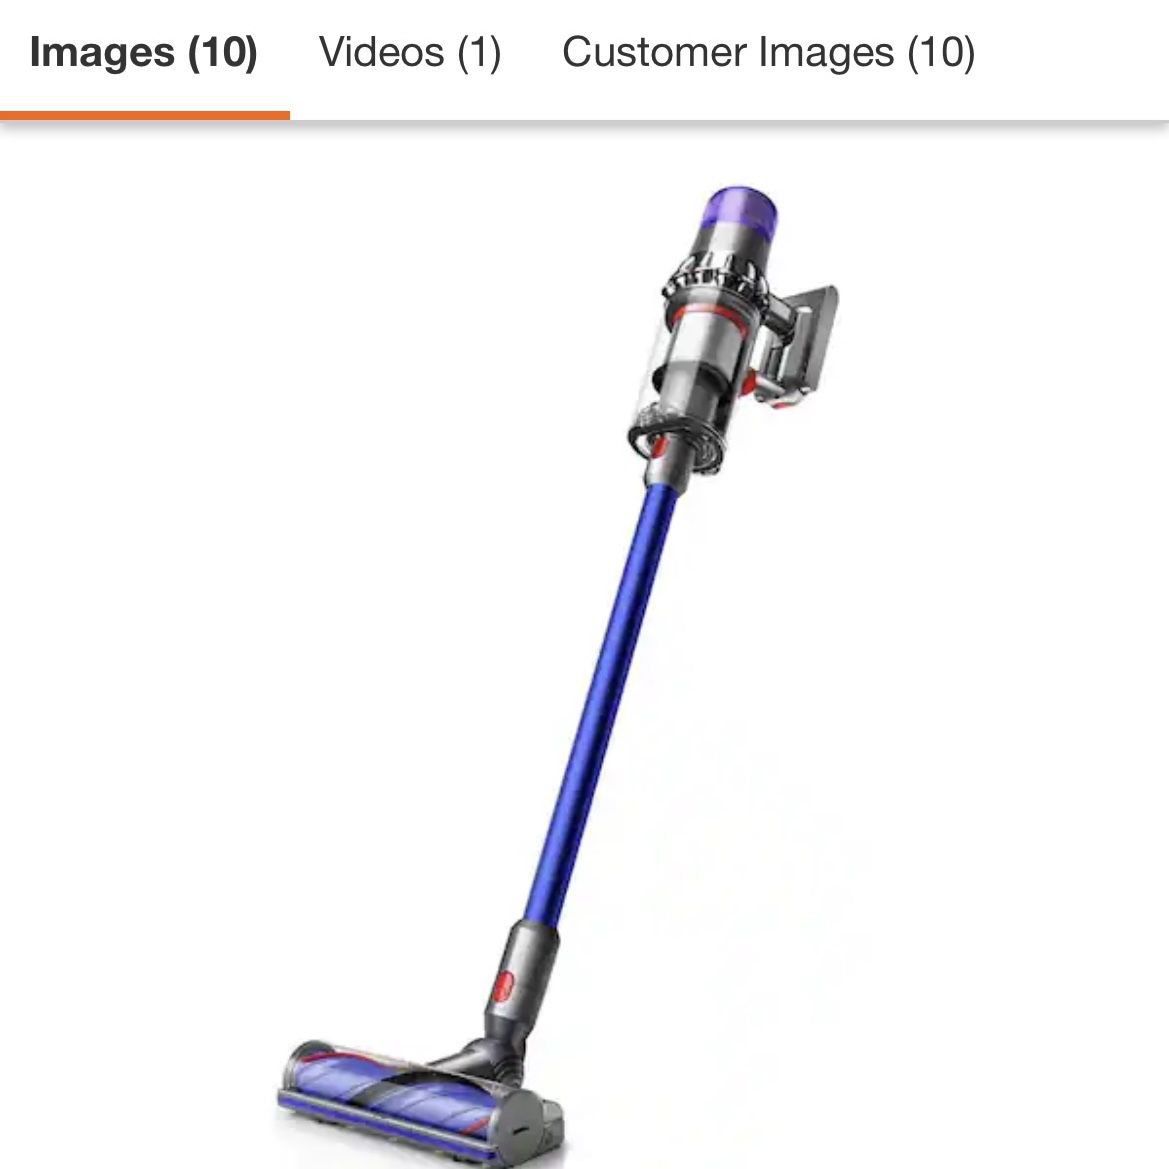 New Dyson V11 Cordless Stick Vacuum Cleaner